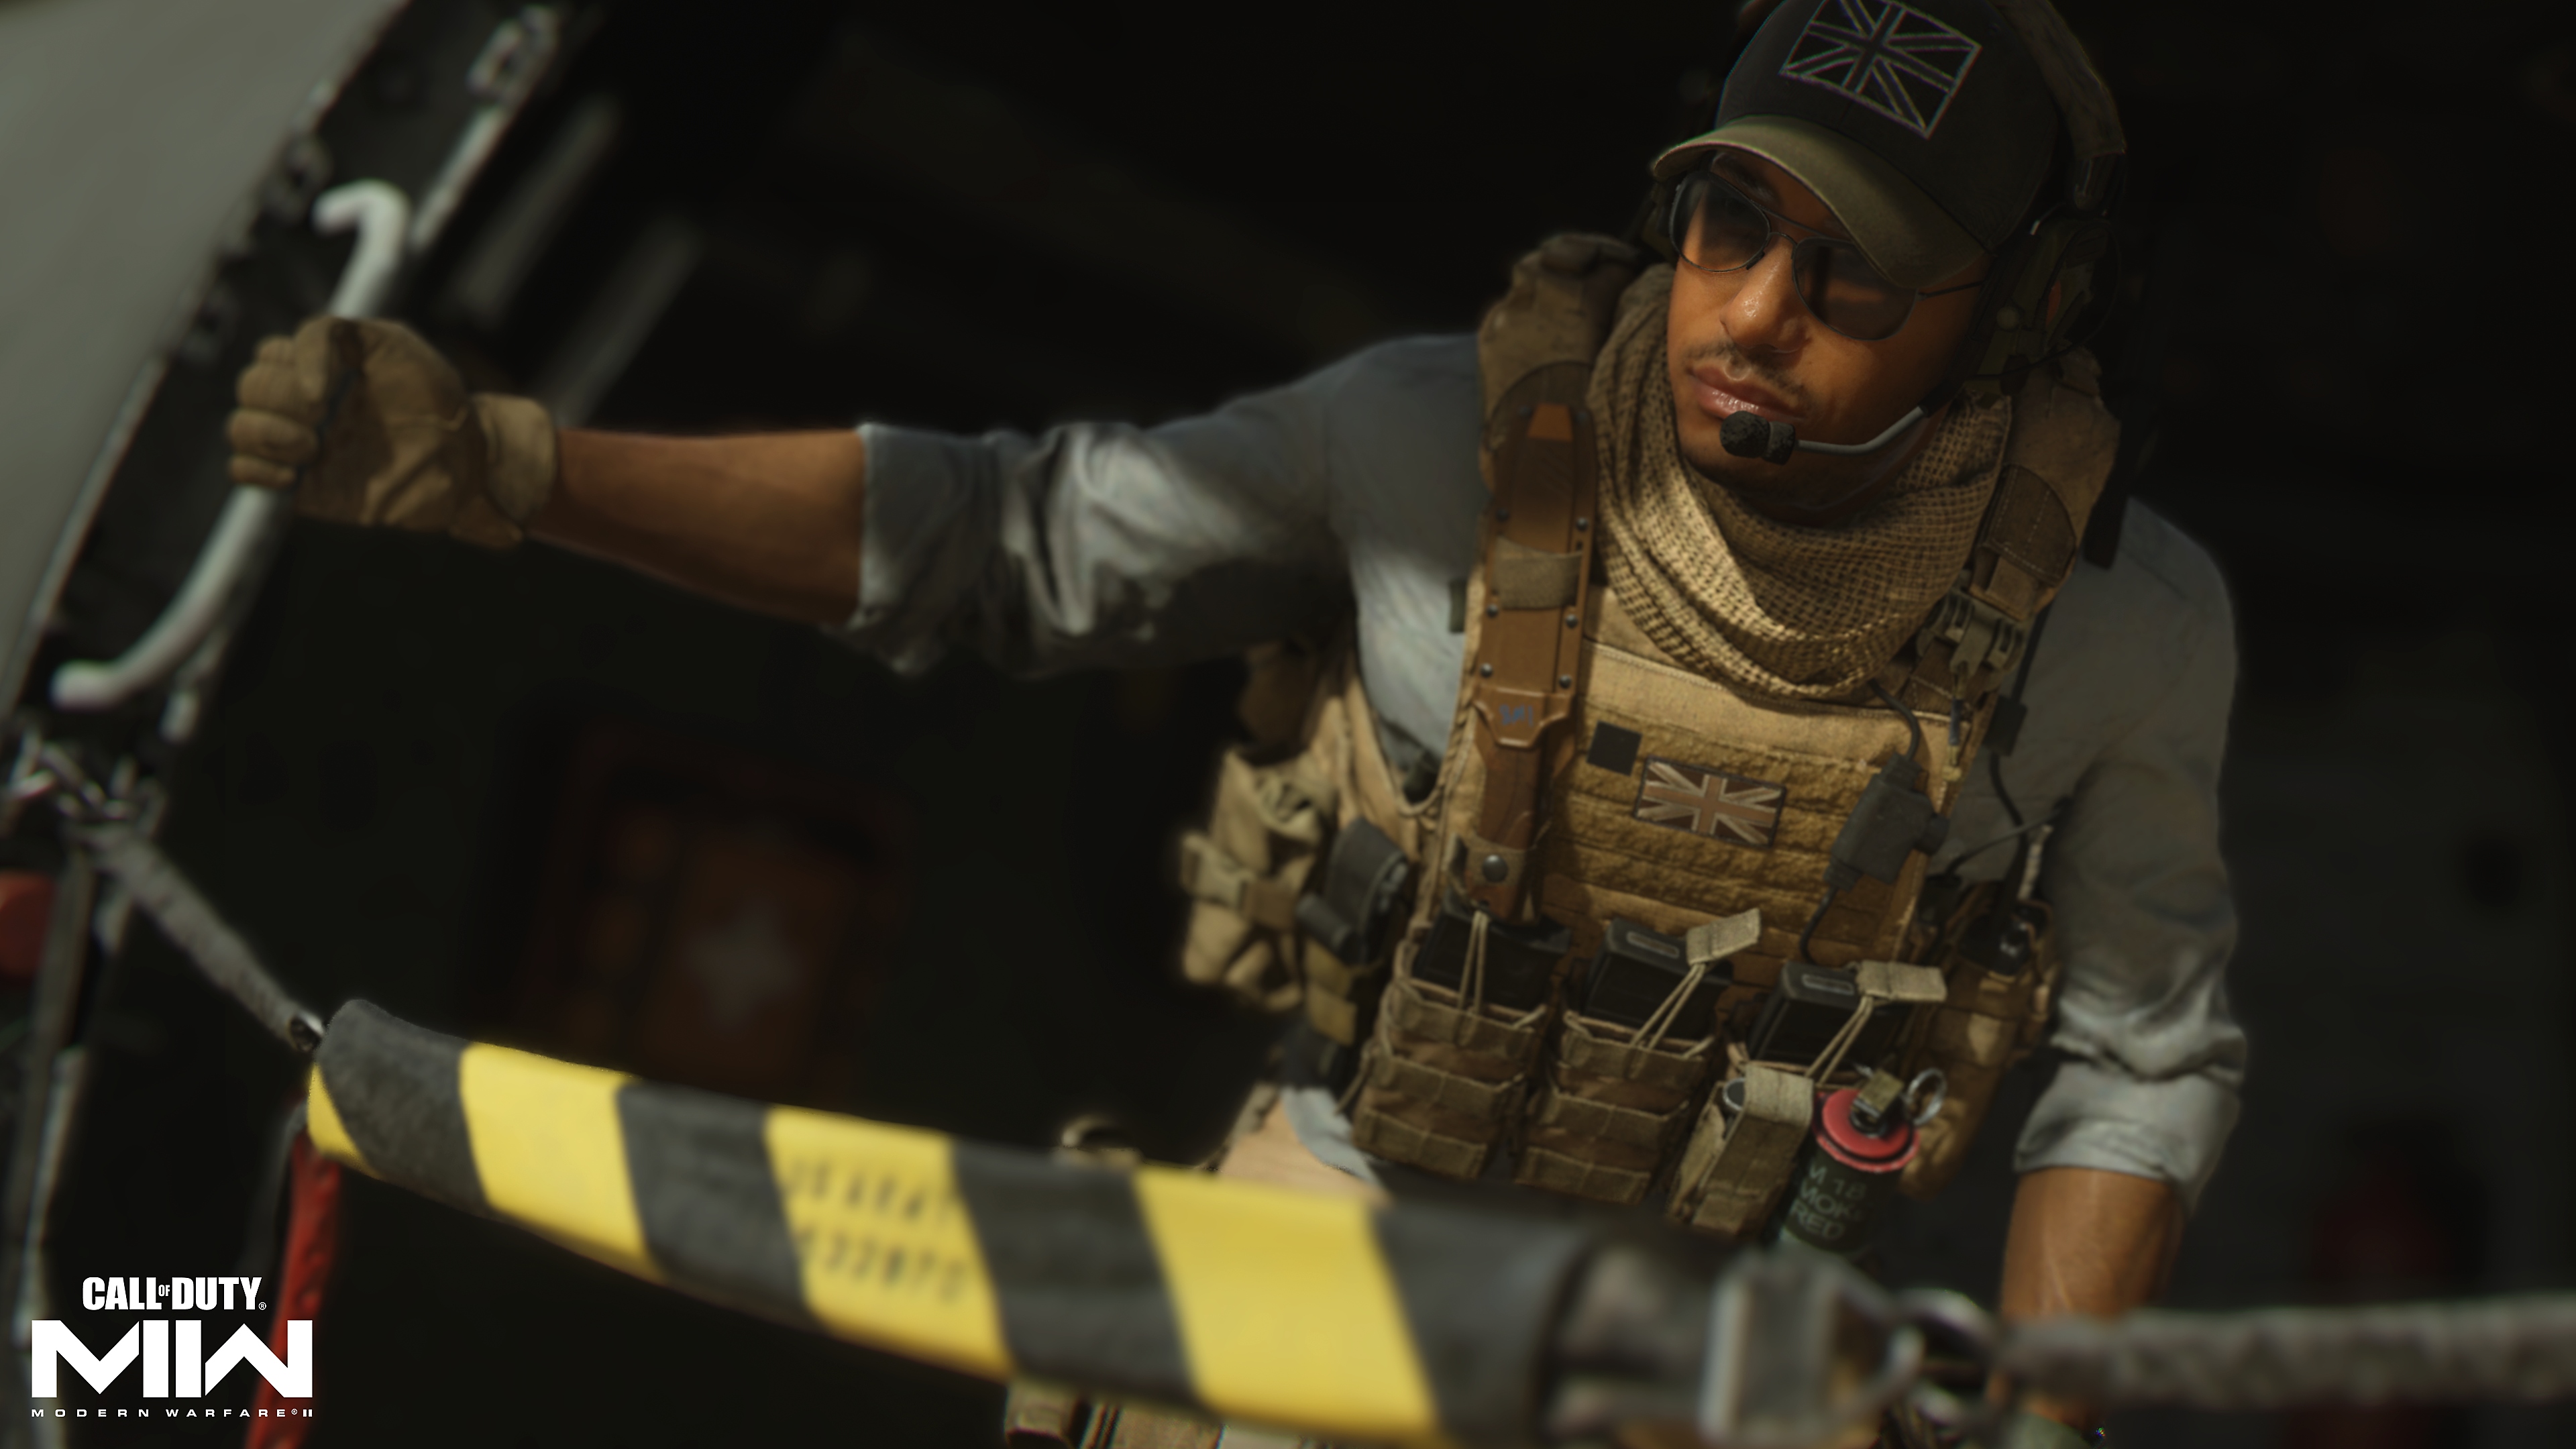 Call of Duty: Modern Warfare 2 2022 captura de pantalla que muestra a un personaje que mira un vehículo aéreo